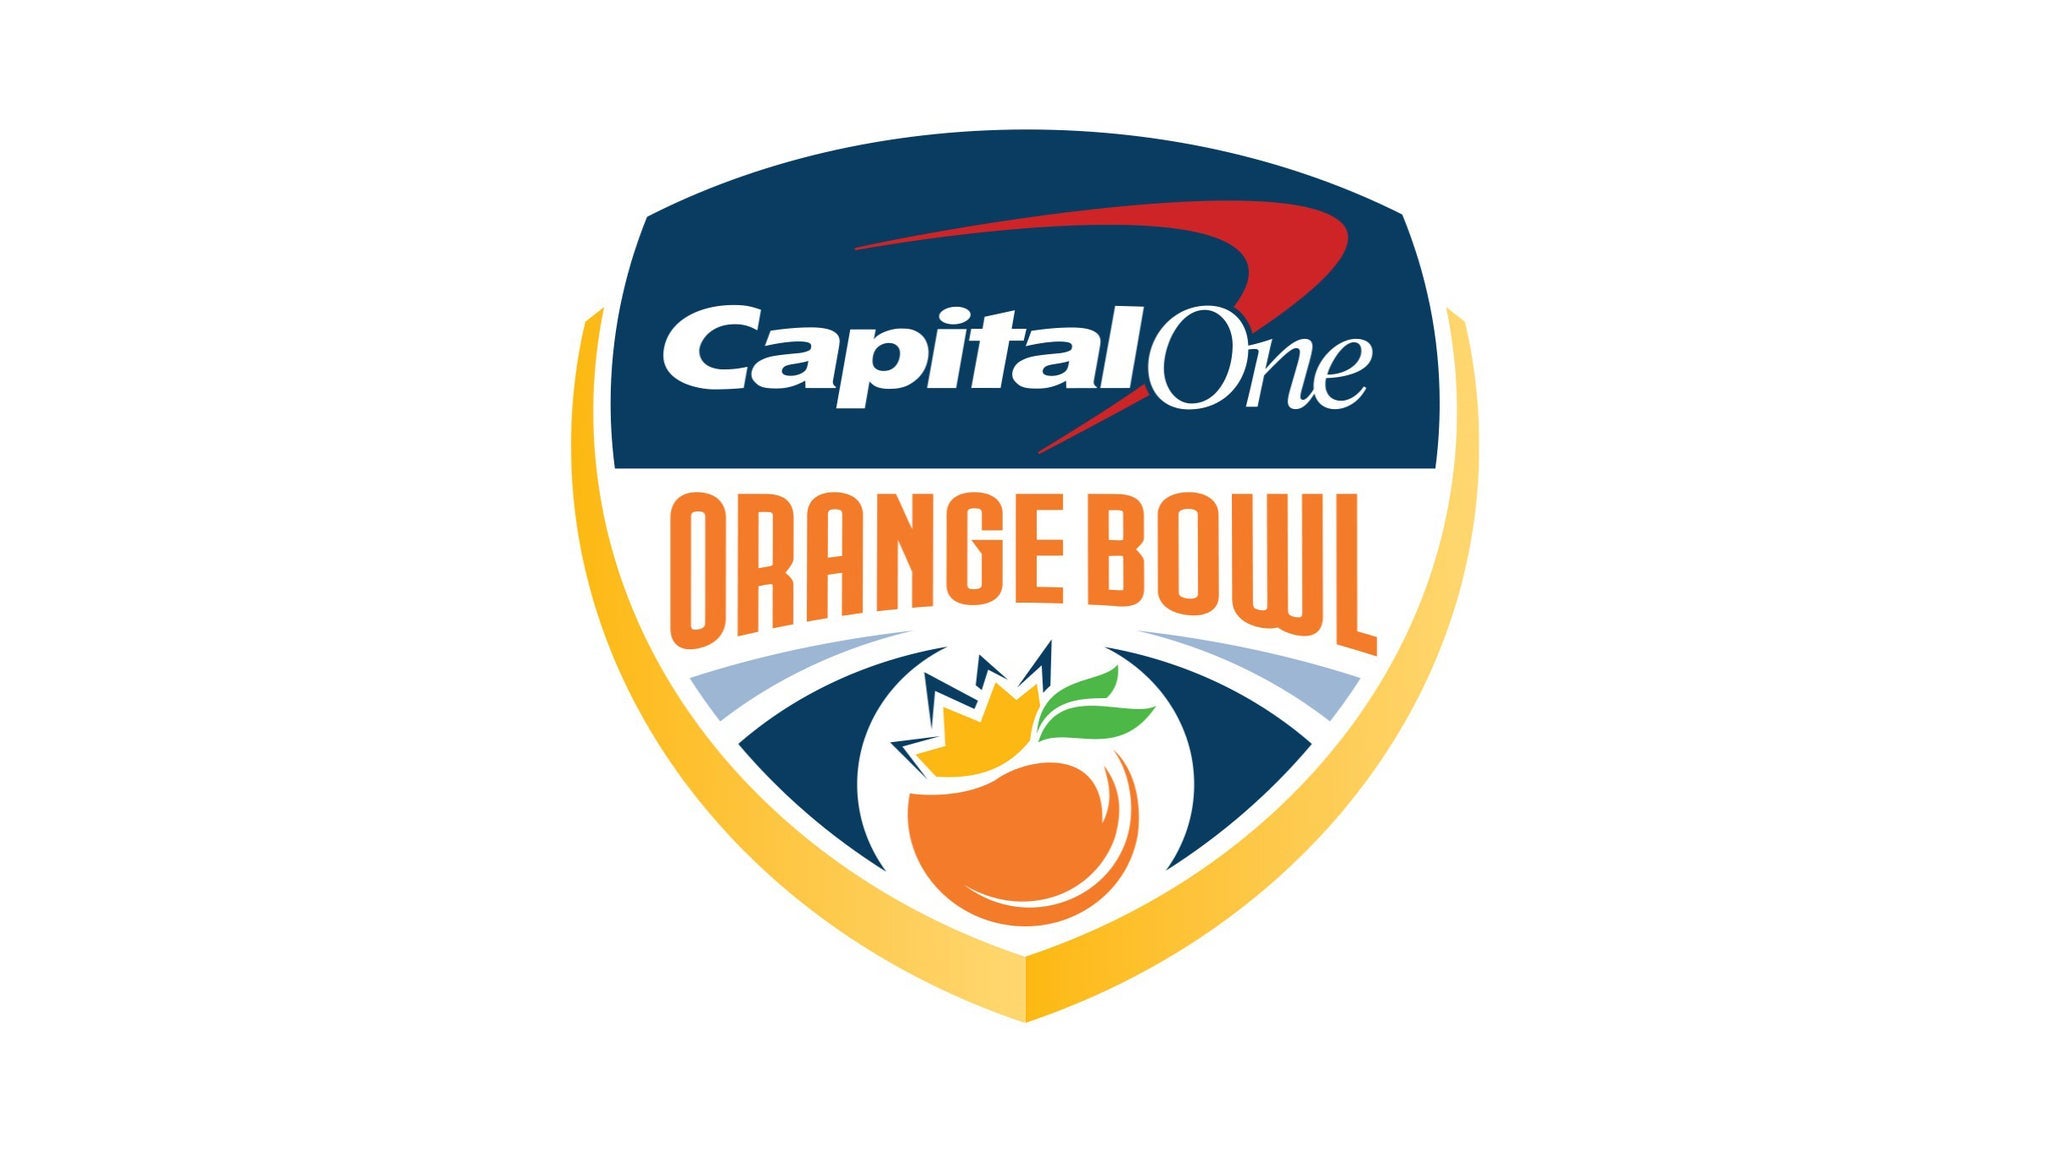 Capital One Bowl Logo